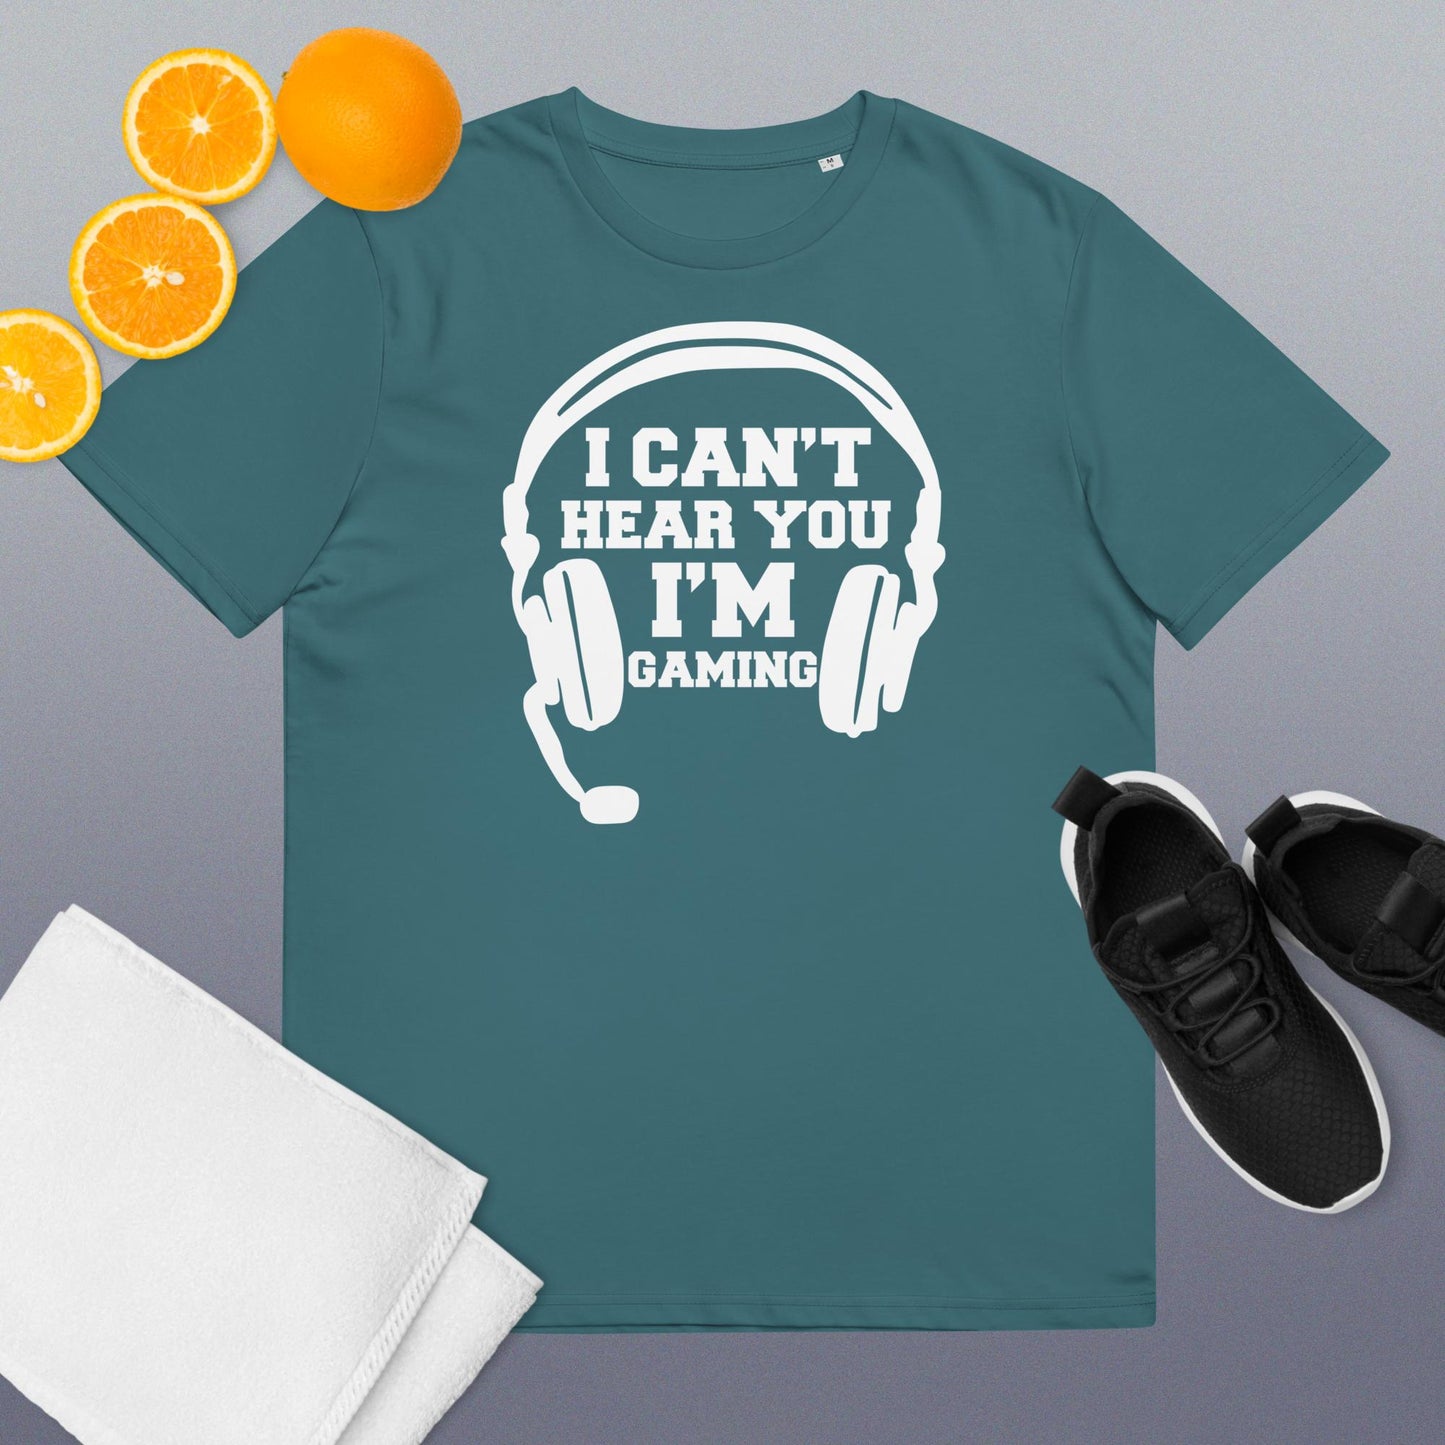 Organic cotton unisex t-shirt: "I can't hear you, i'm gaming", dark